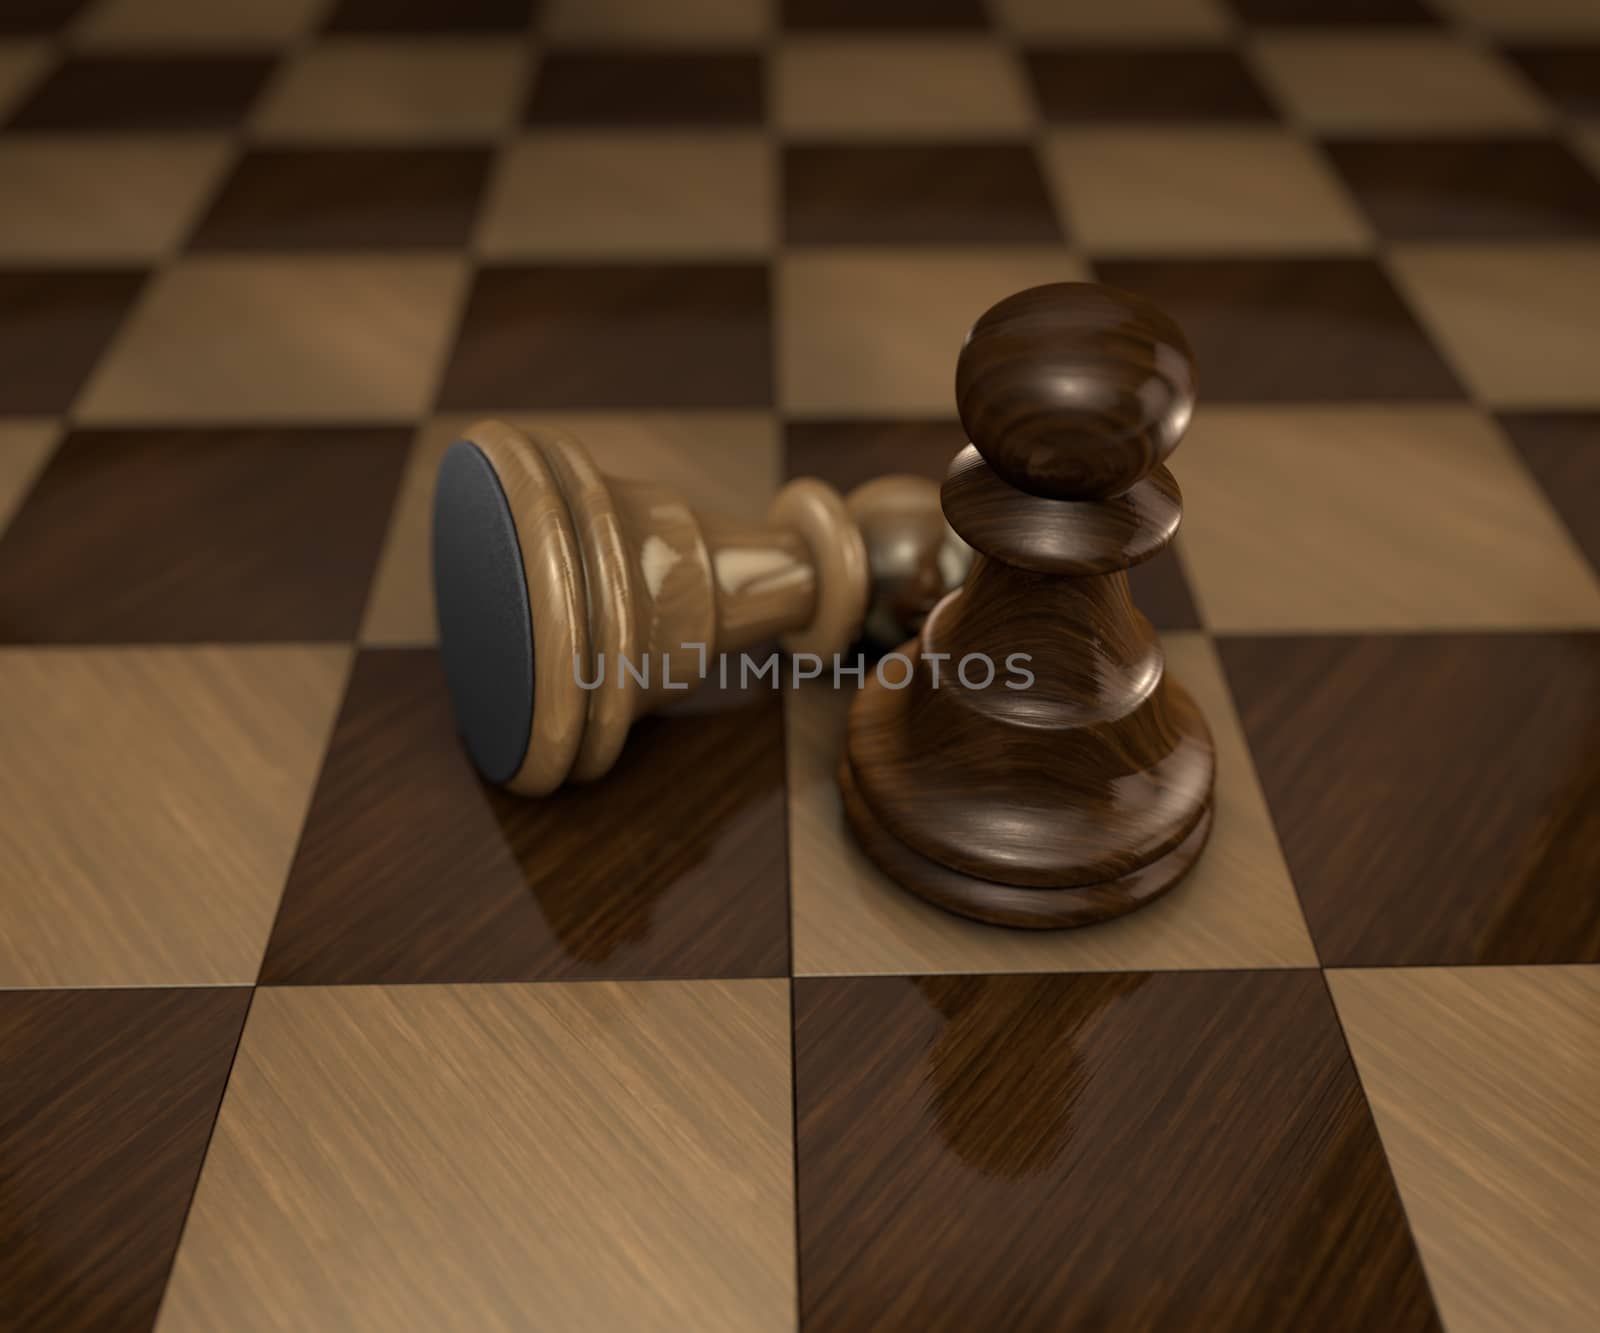 one fallen light chess piece next to standing dark chess piece on a checkered board